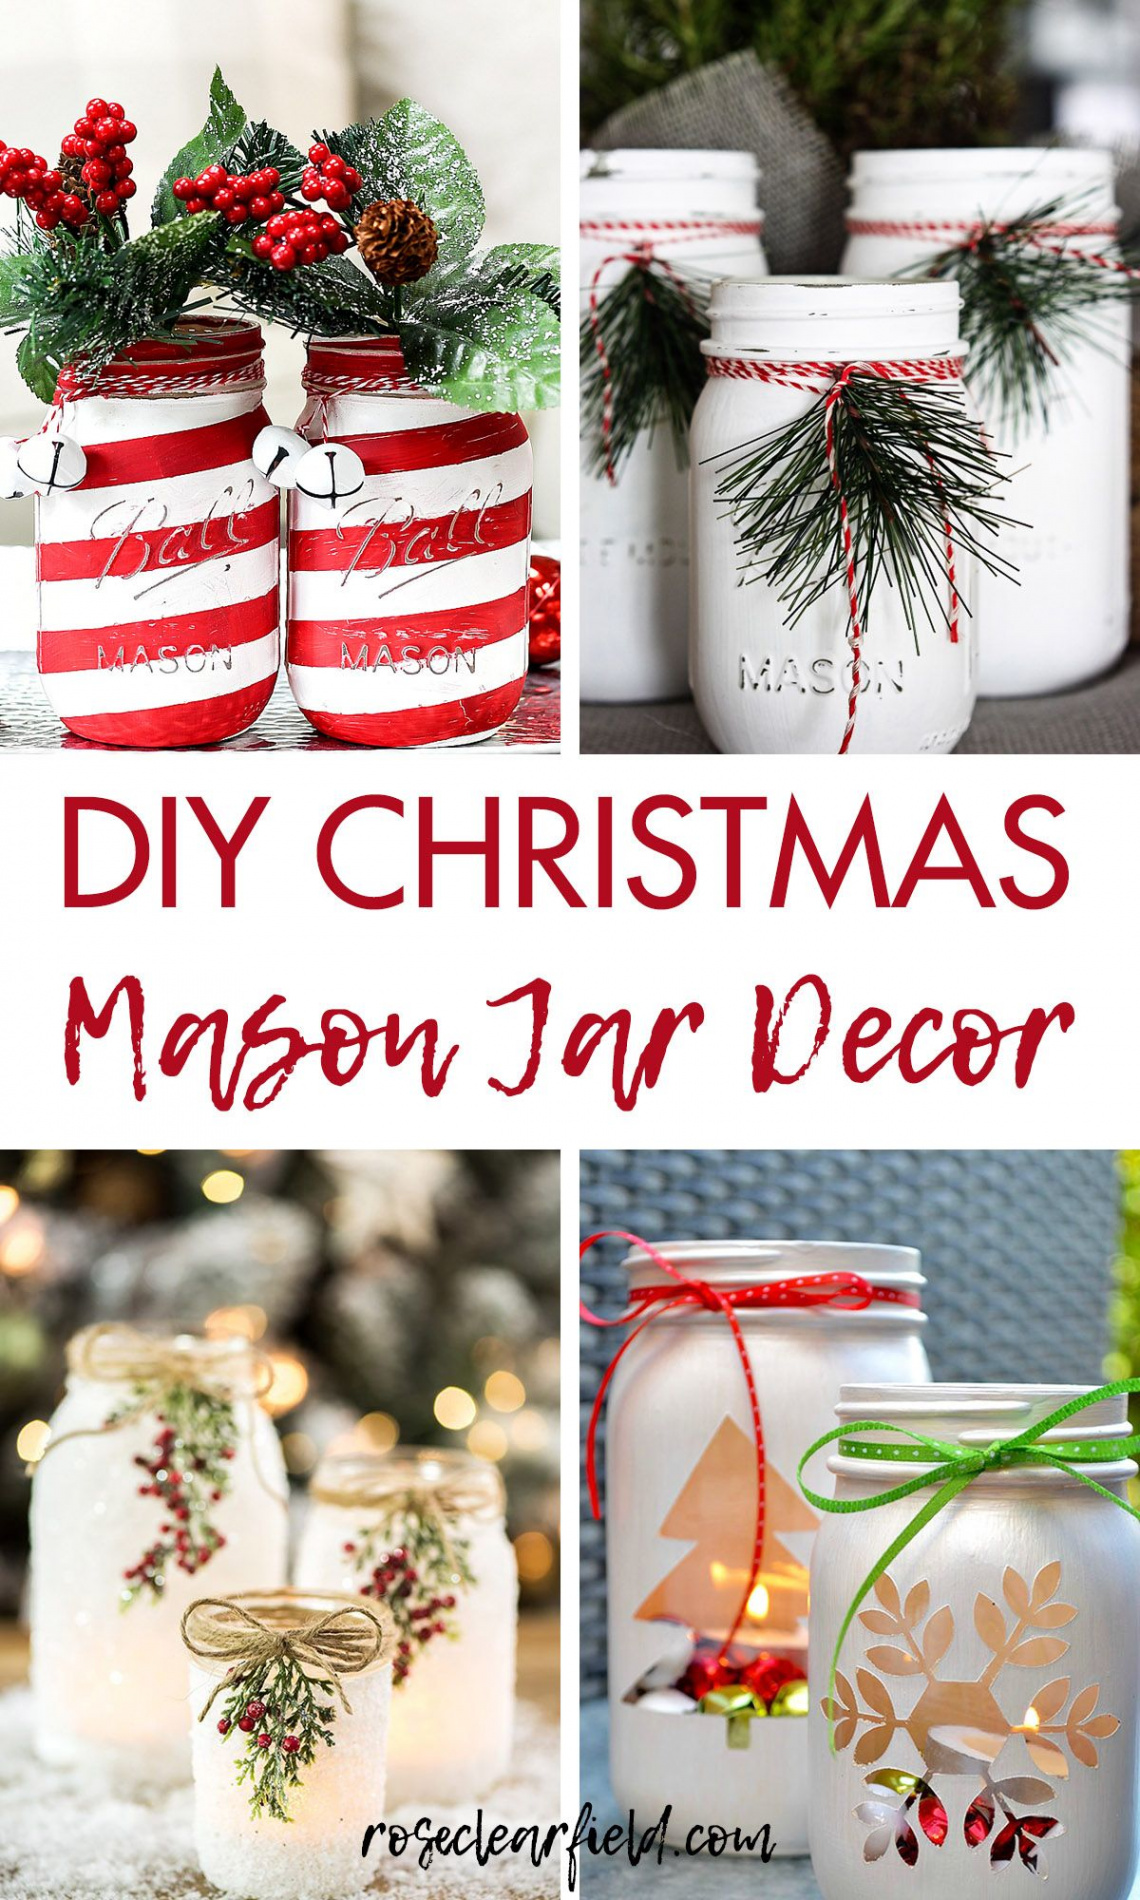 DIY Christmas Mason Jar Decor - Rose Clearfield  Mason jar